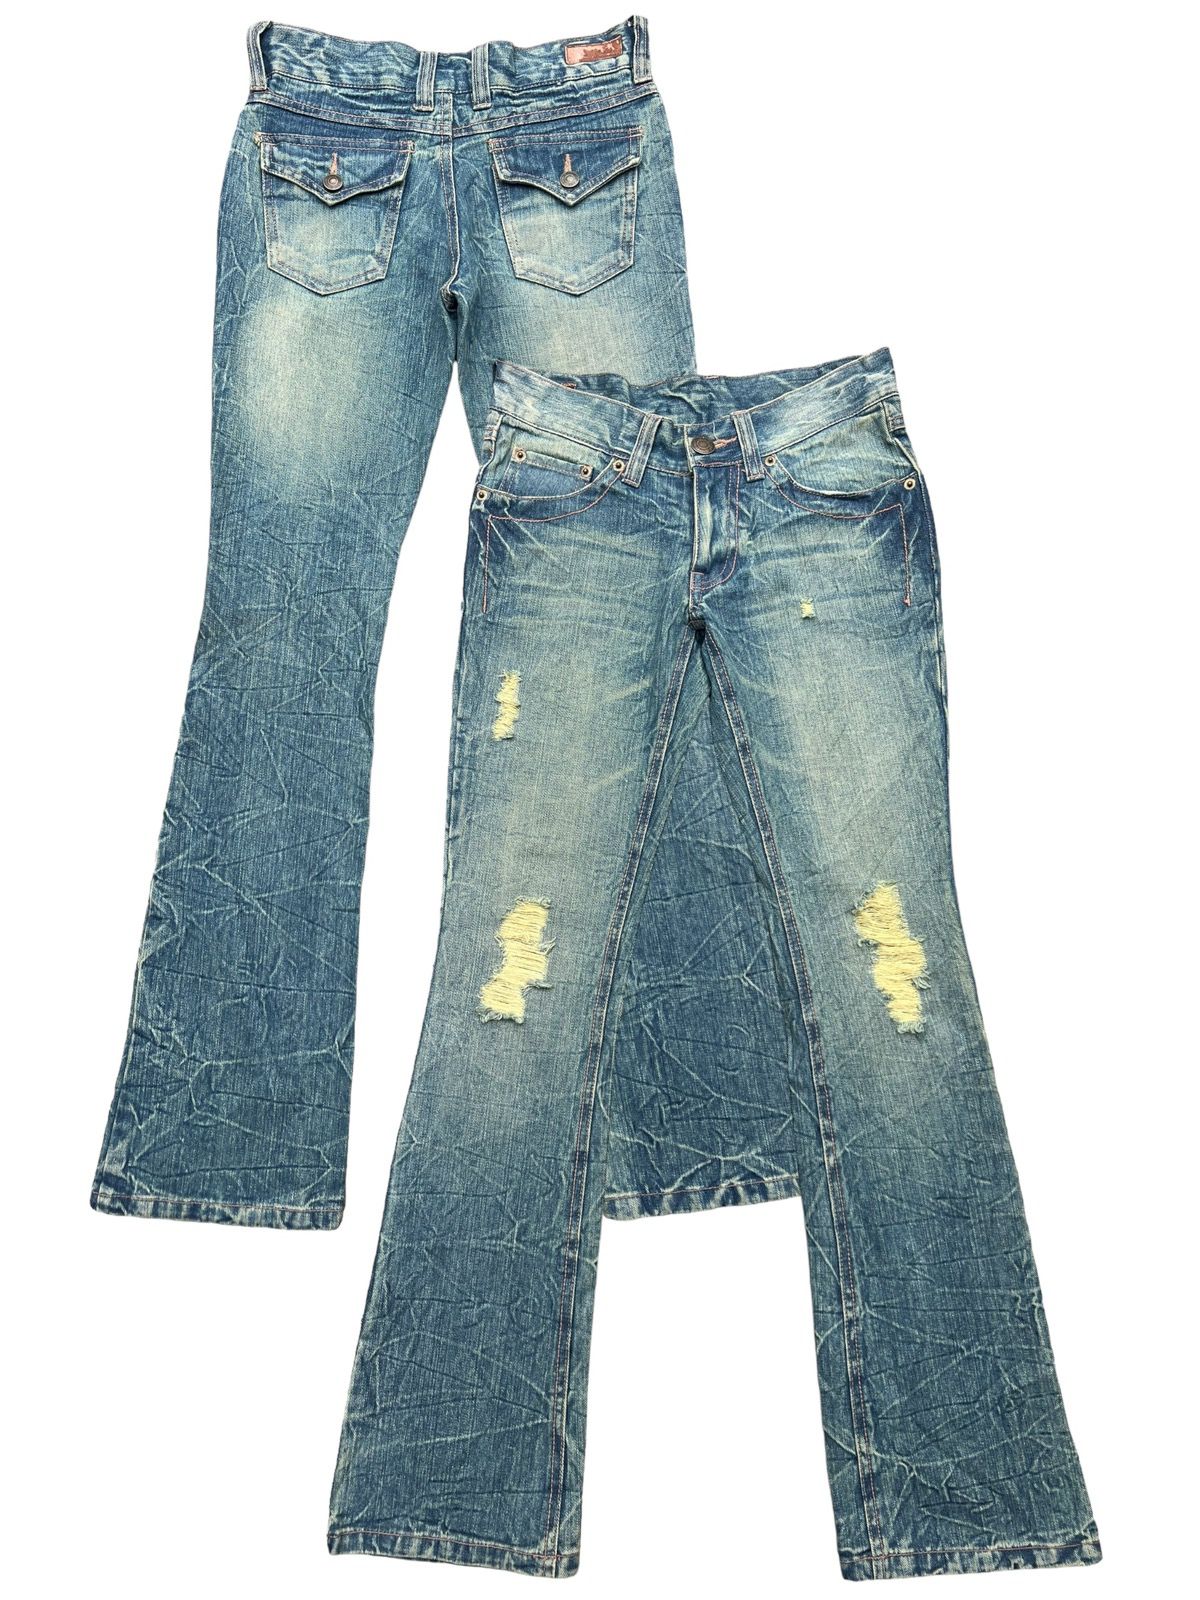 Hype - Japanese Brand Distressed Mudwash Flare Denim Jeans 28x30.5 - 1